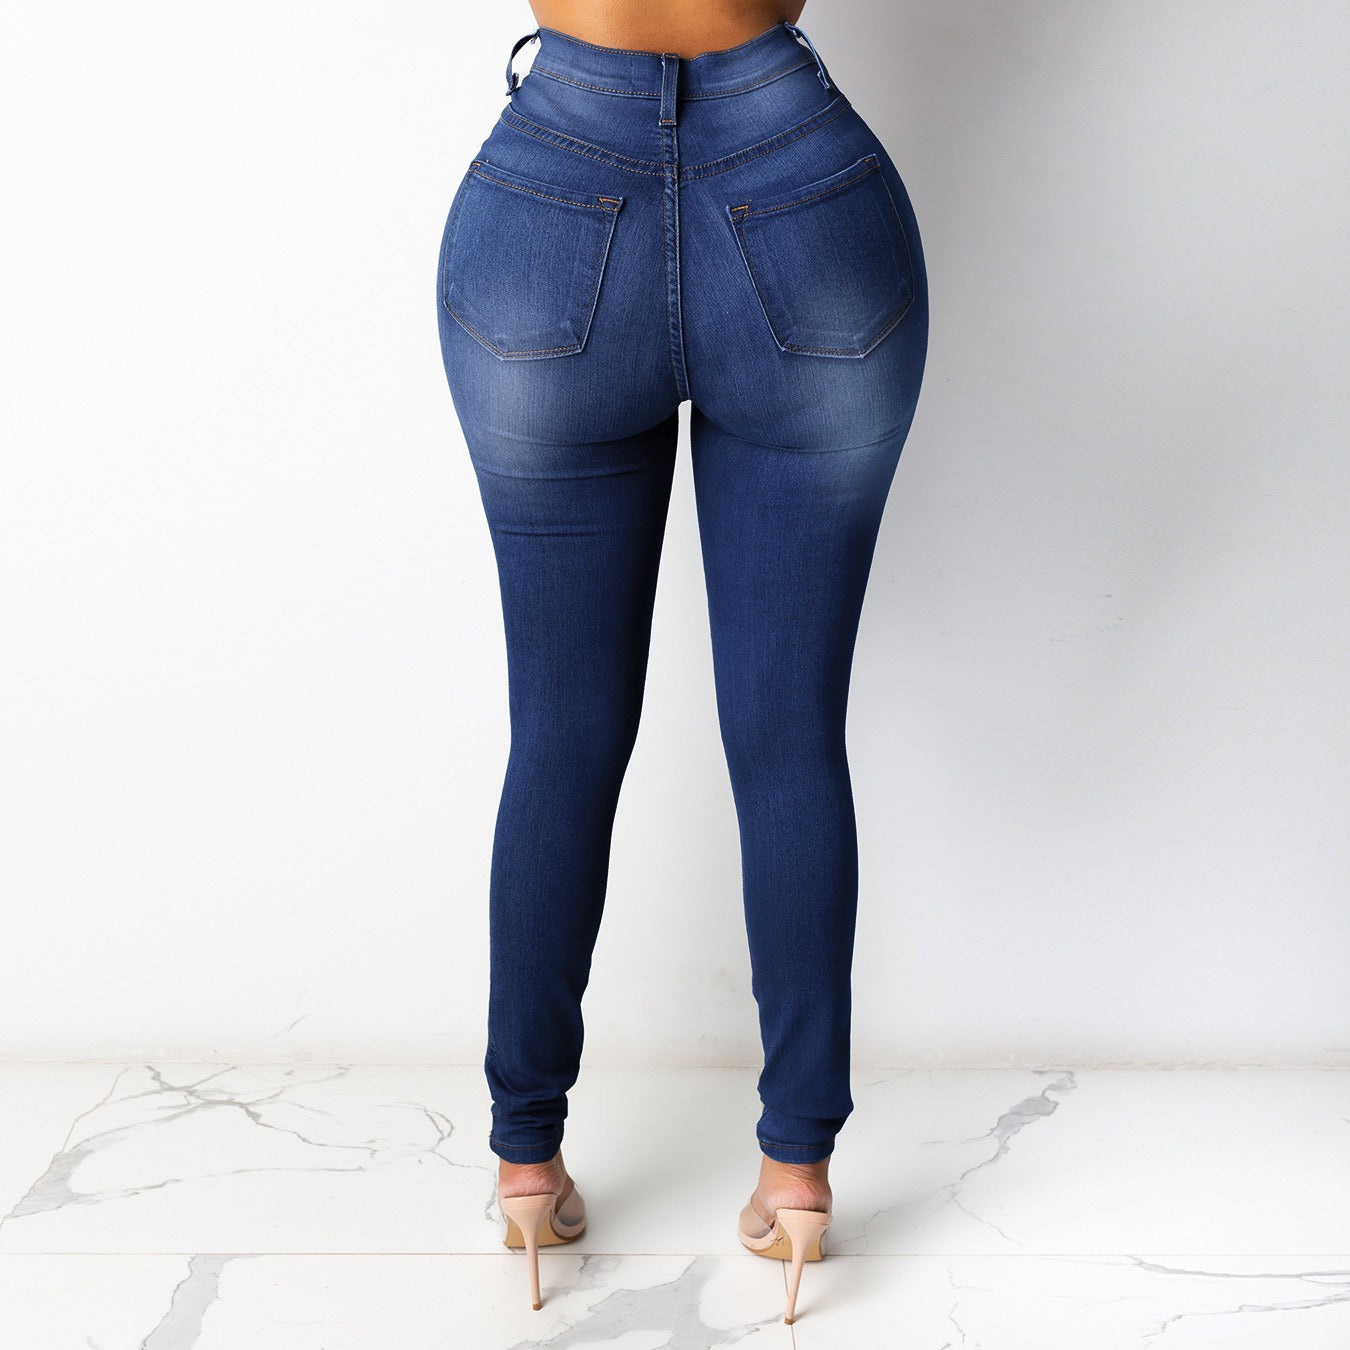 New 5 Colors High Waist Thin Jeans For Women Fashion Casual Slim Elastic Denim Pencil Pants